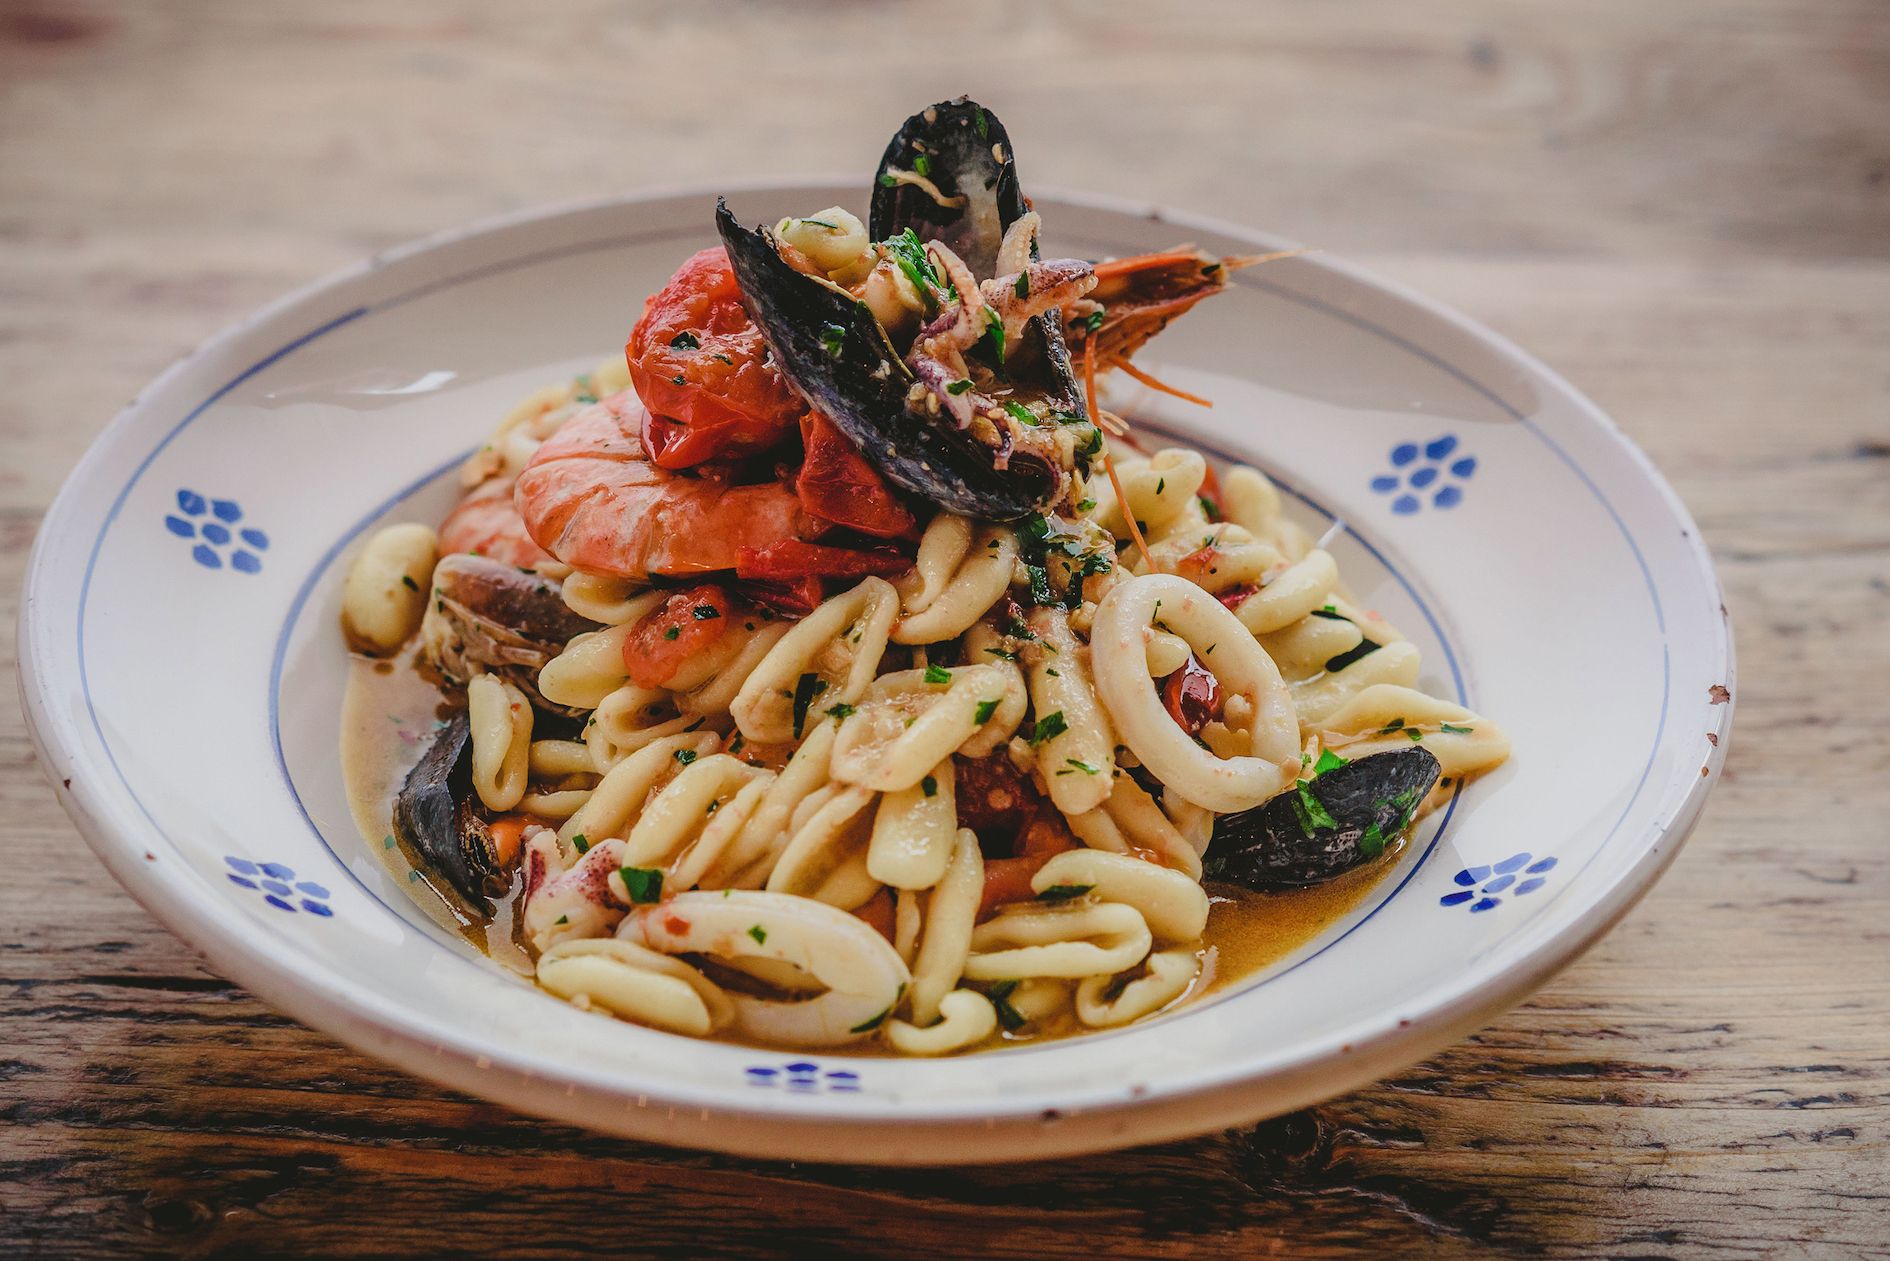 Italian Restaurants We Want To Go To - Sugo Pasta Kitchen - Humphrey Munson Blog